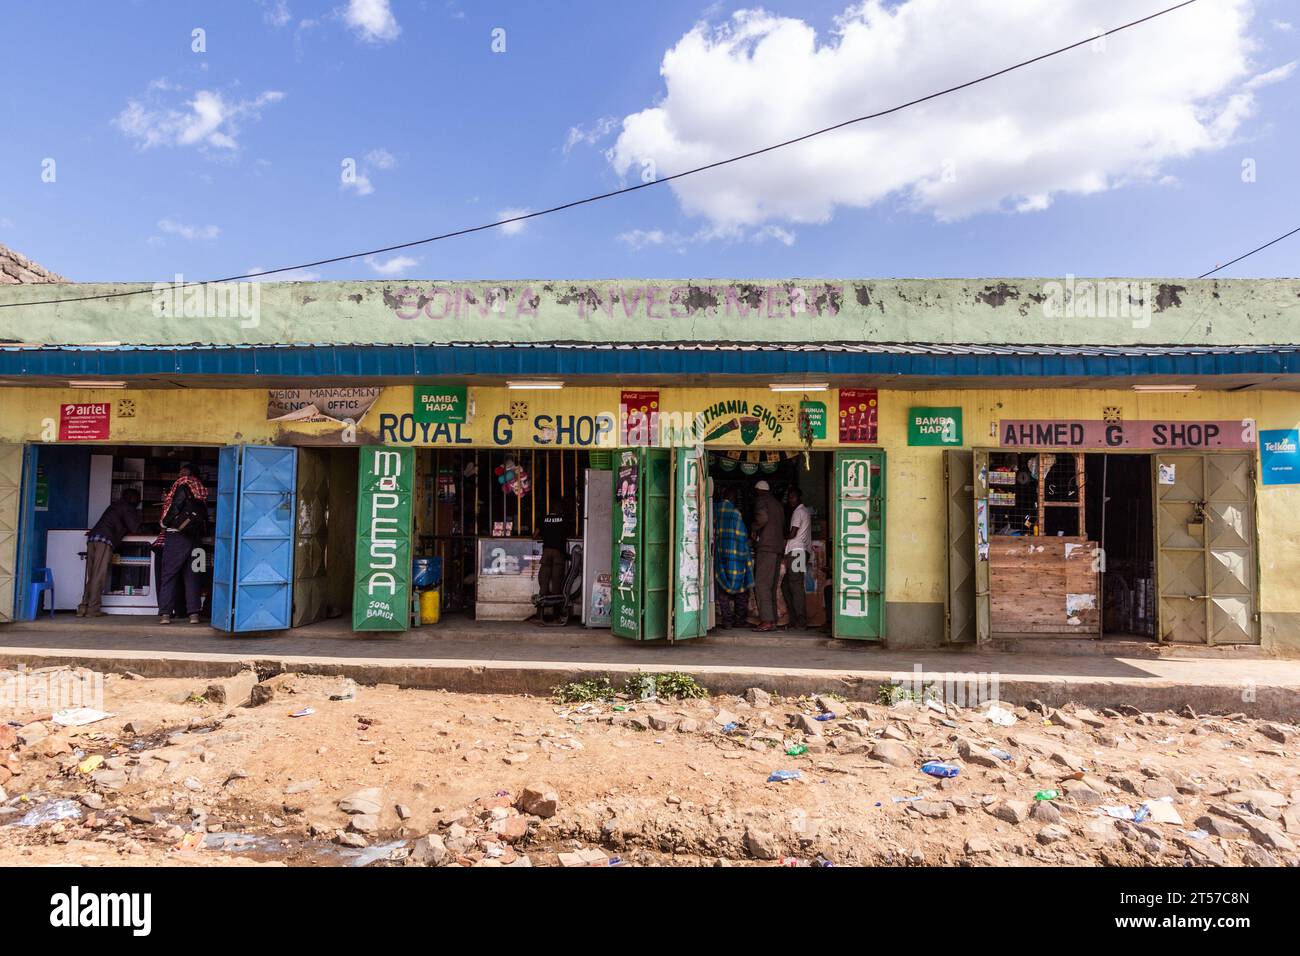 EWASO NGIRO, KENIA - 18. FEBRUAR 2020: Verschiedene Geschäfte im Dorf Ewaso Ngiro, Kenia Stockfoto